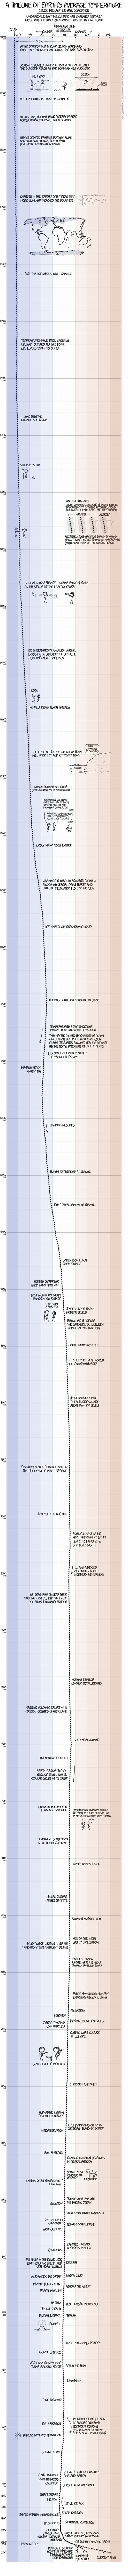 Earth temperature timeline